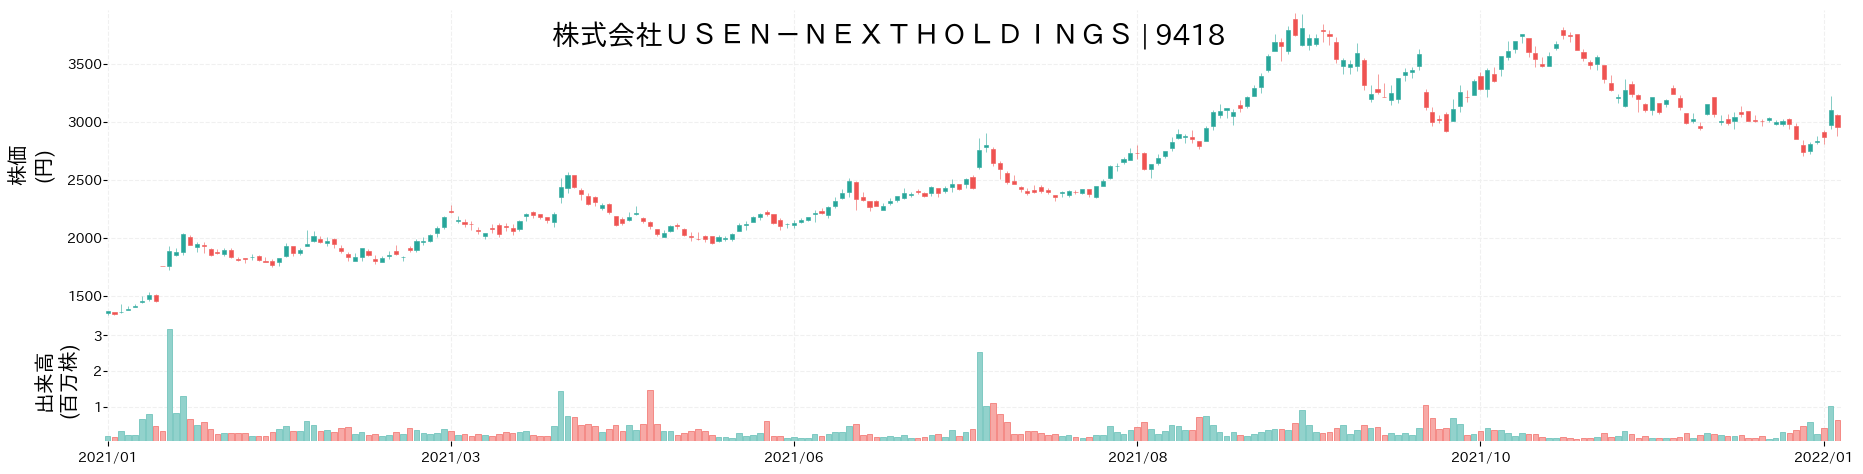 USEN-NEXT HOLDINGS の株価推移(2021)